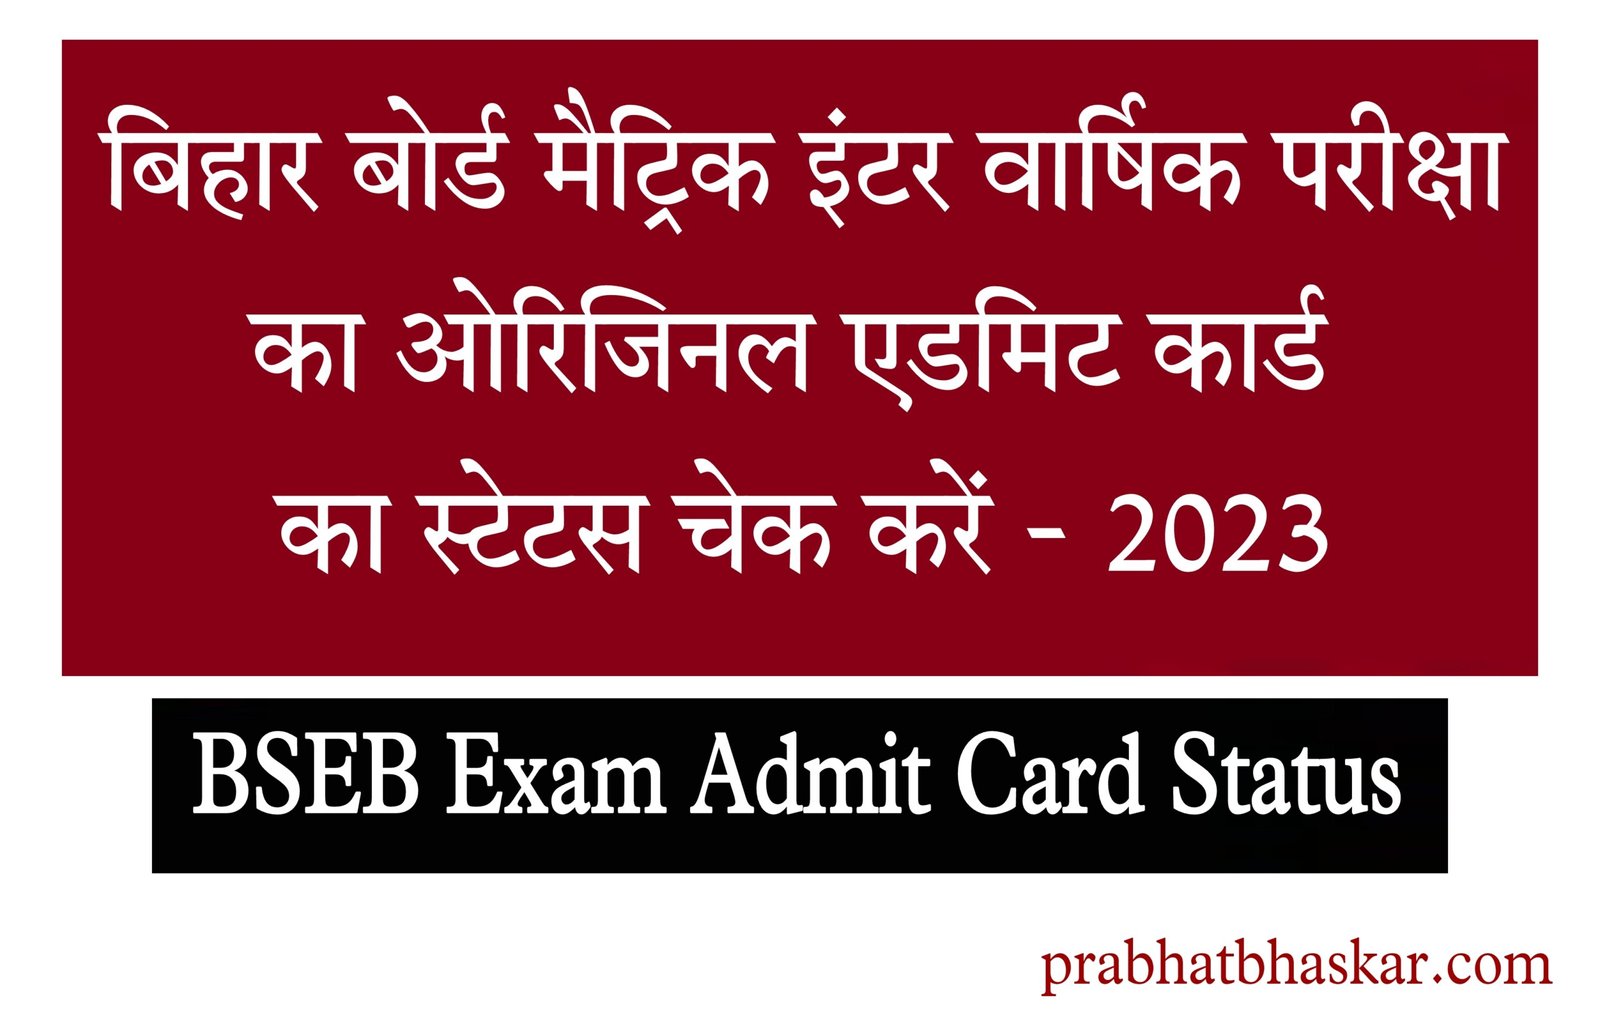 Bihar Board Exam Admit Card Status 2023